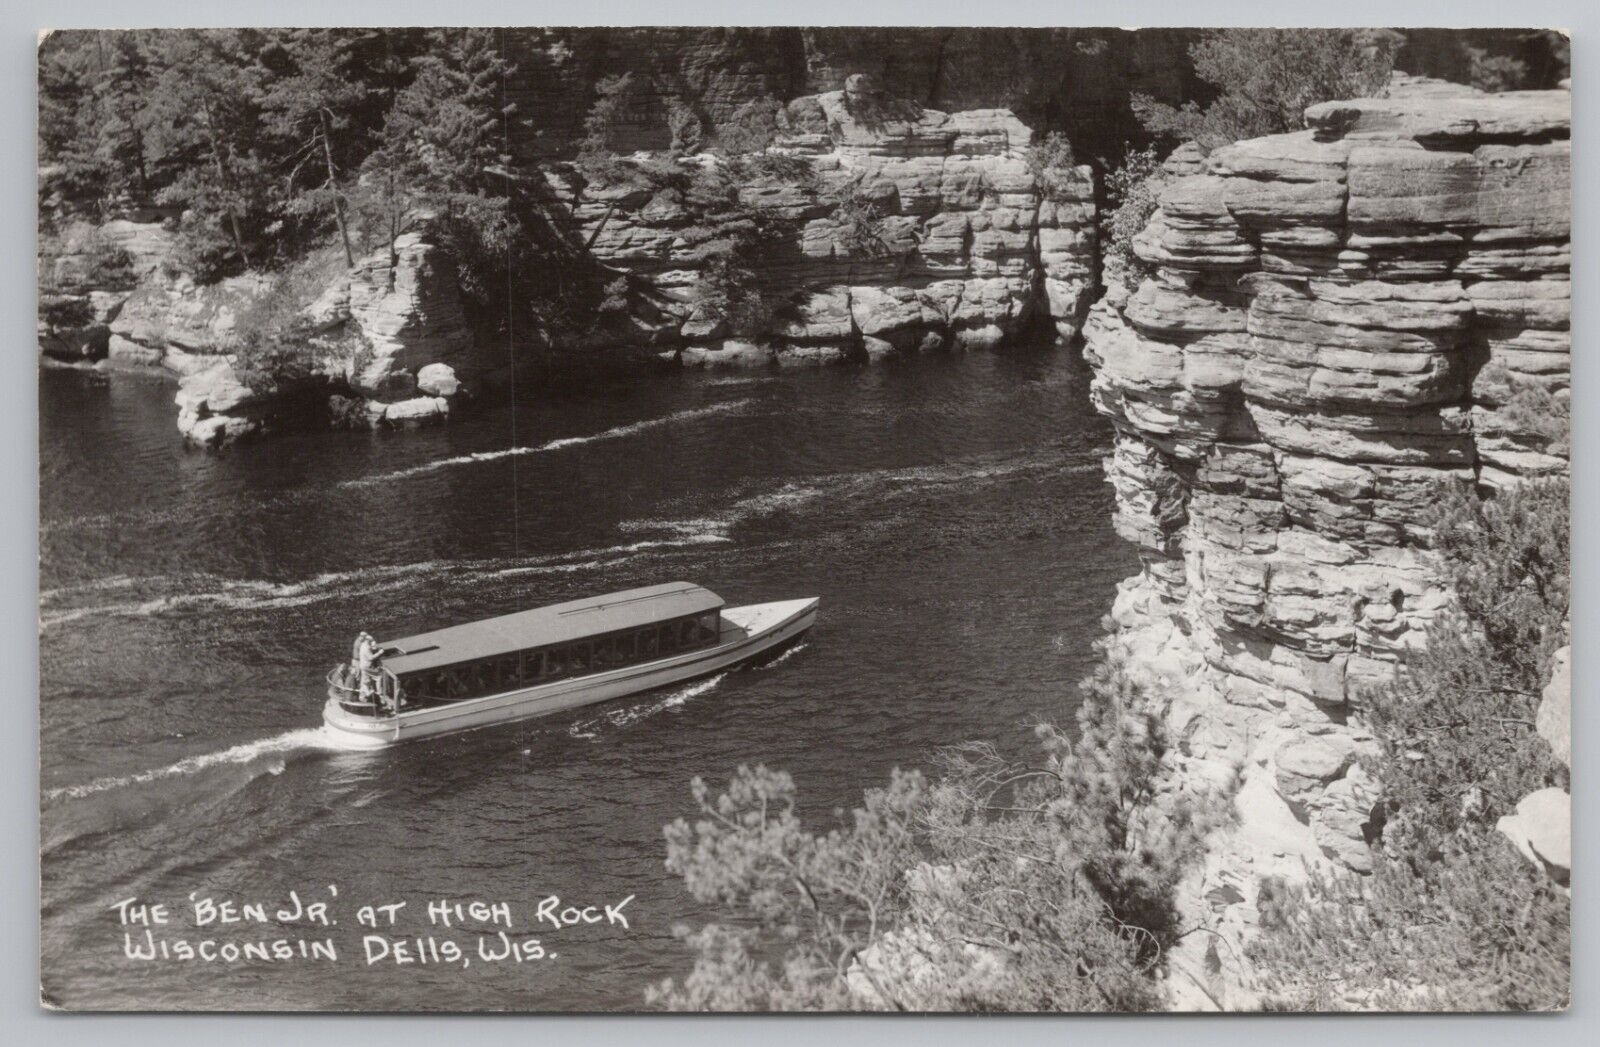 RPPC Wisconsin Dells, WI The Ben Junior Boat at High Rock c1950 Photo Postcard